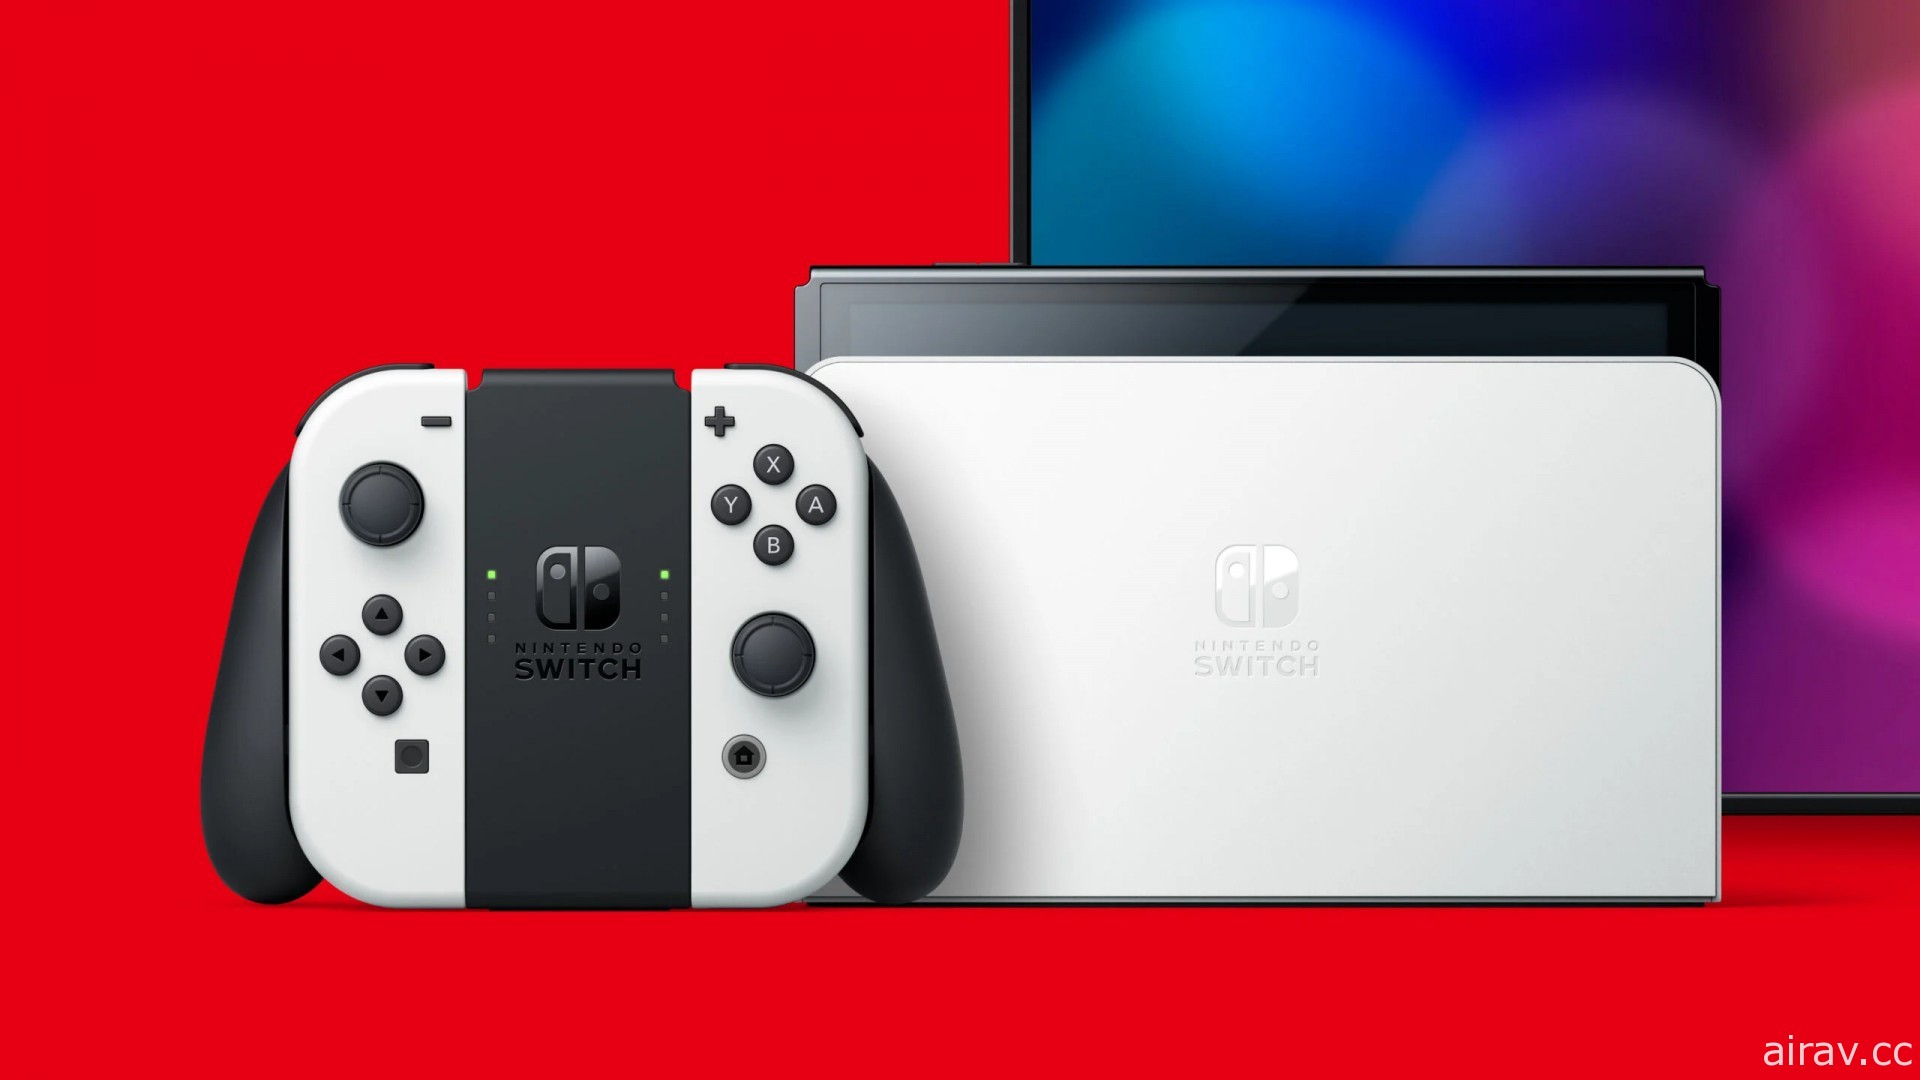 Nintendo Switch 釋出 13.0.0 版系統軟體更新 新增支援藍牙耳機與底座更新功能